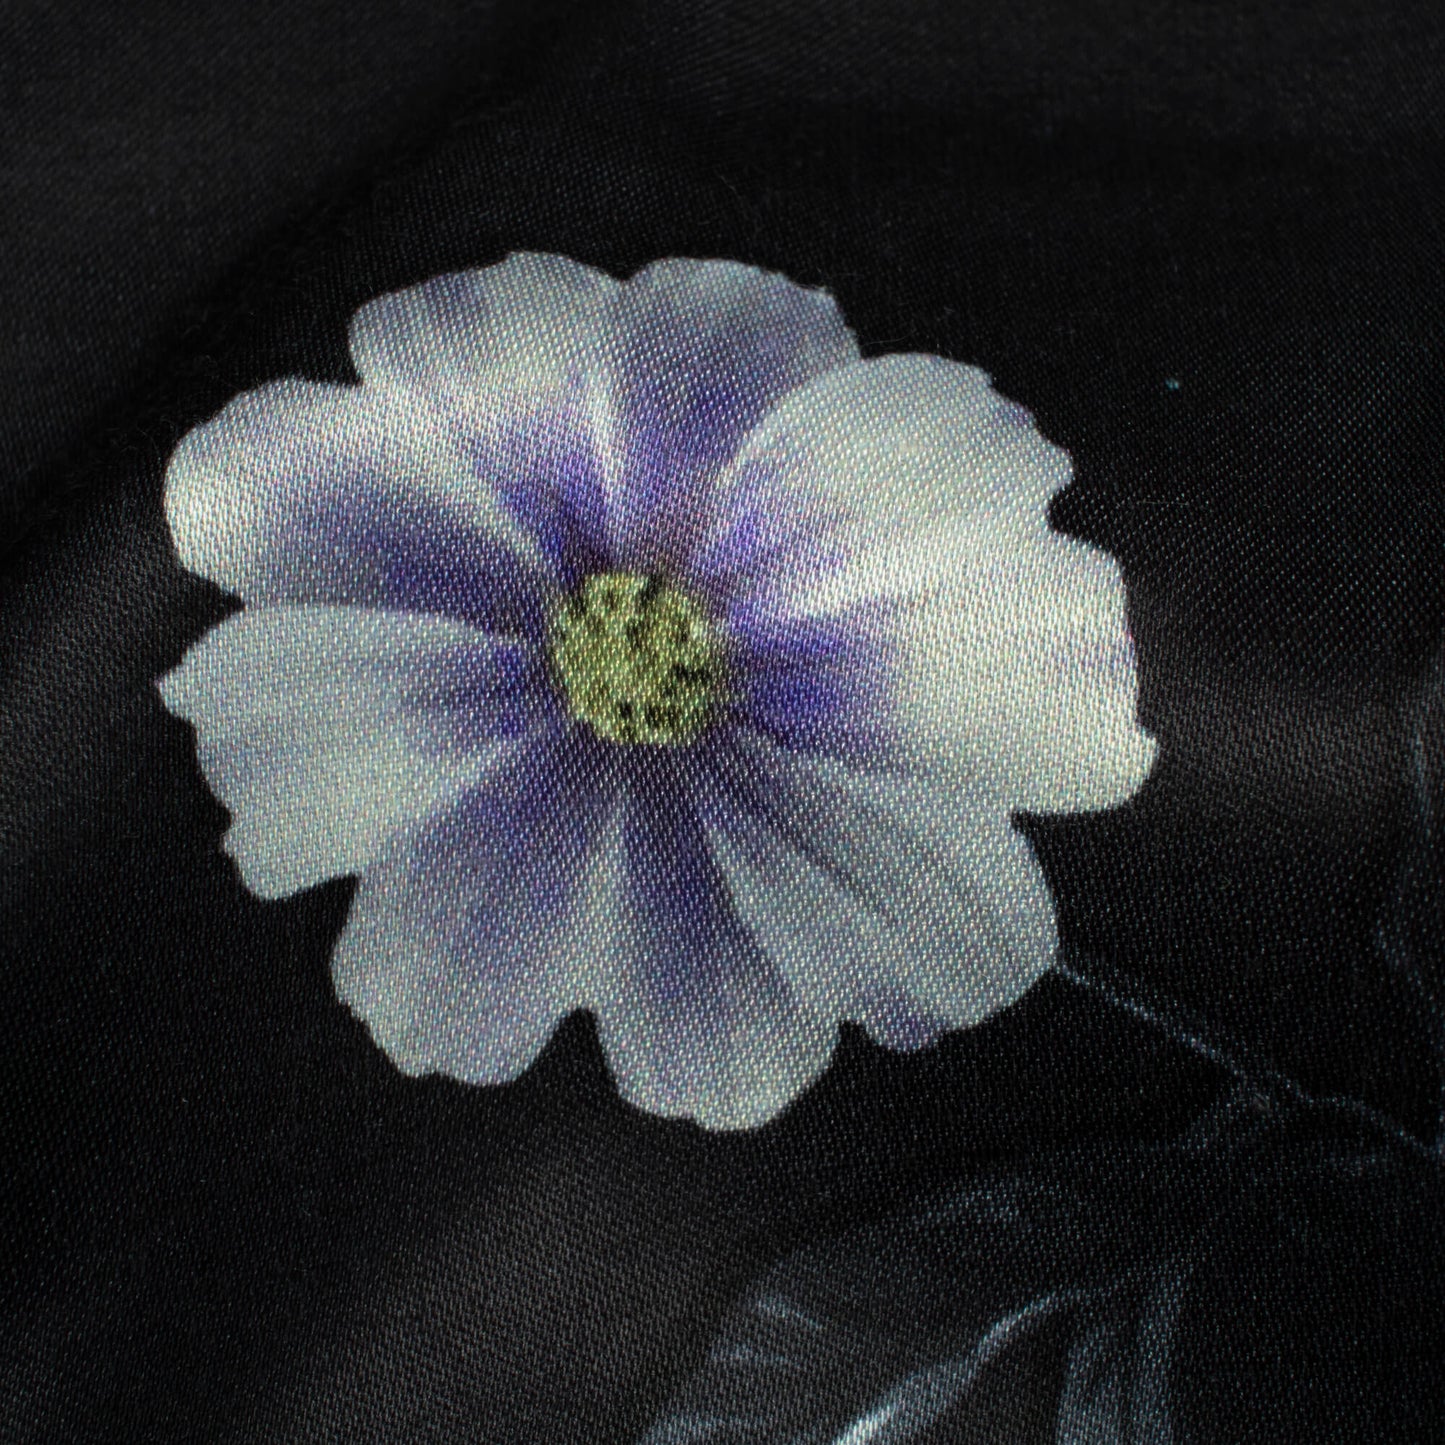 Black And Cream Floral Pattern Digital Print Premium Lush Satin Fabric